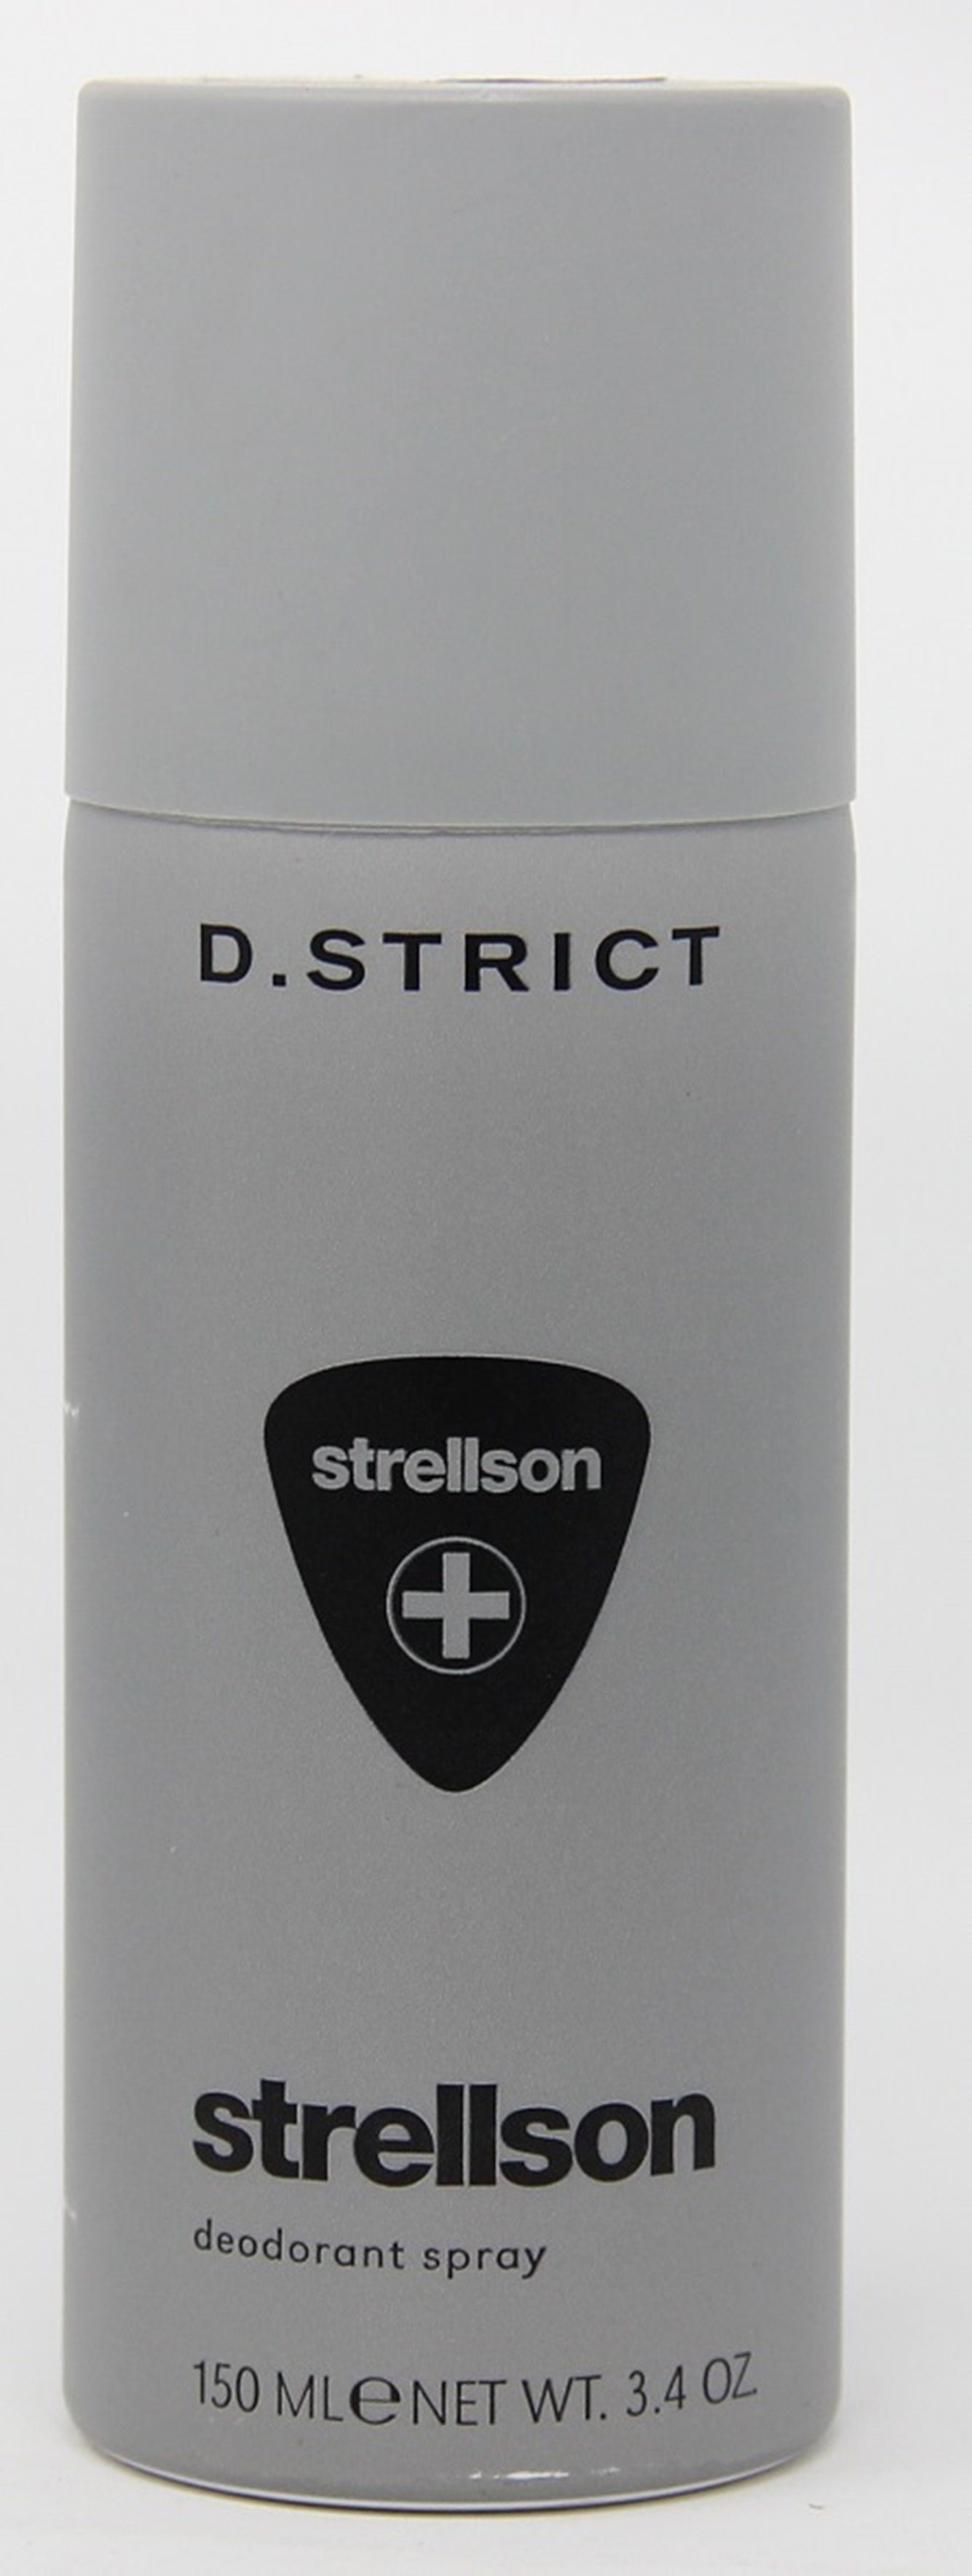 Deo-Spray D.Strict Spray Strellson Strellson Deodorant 150ml